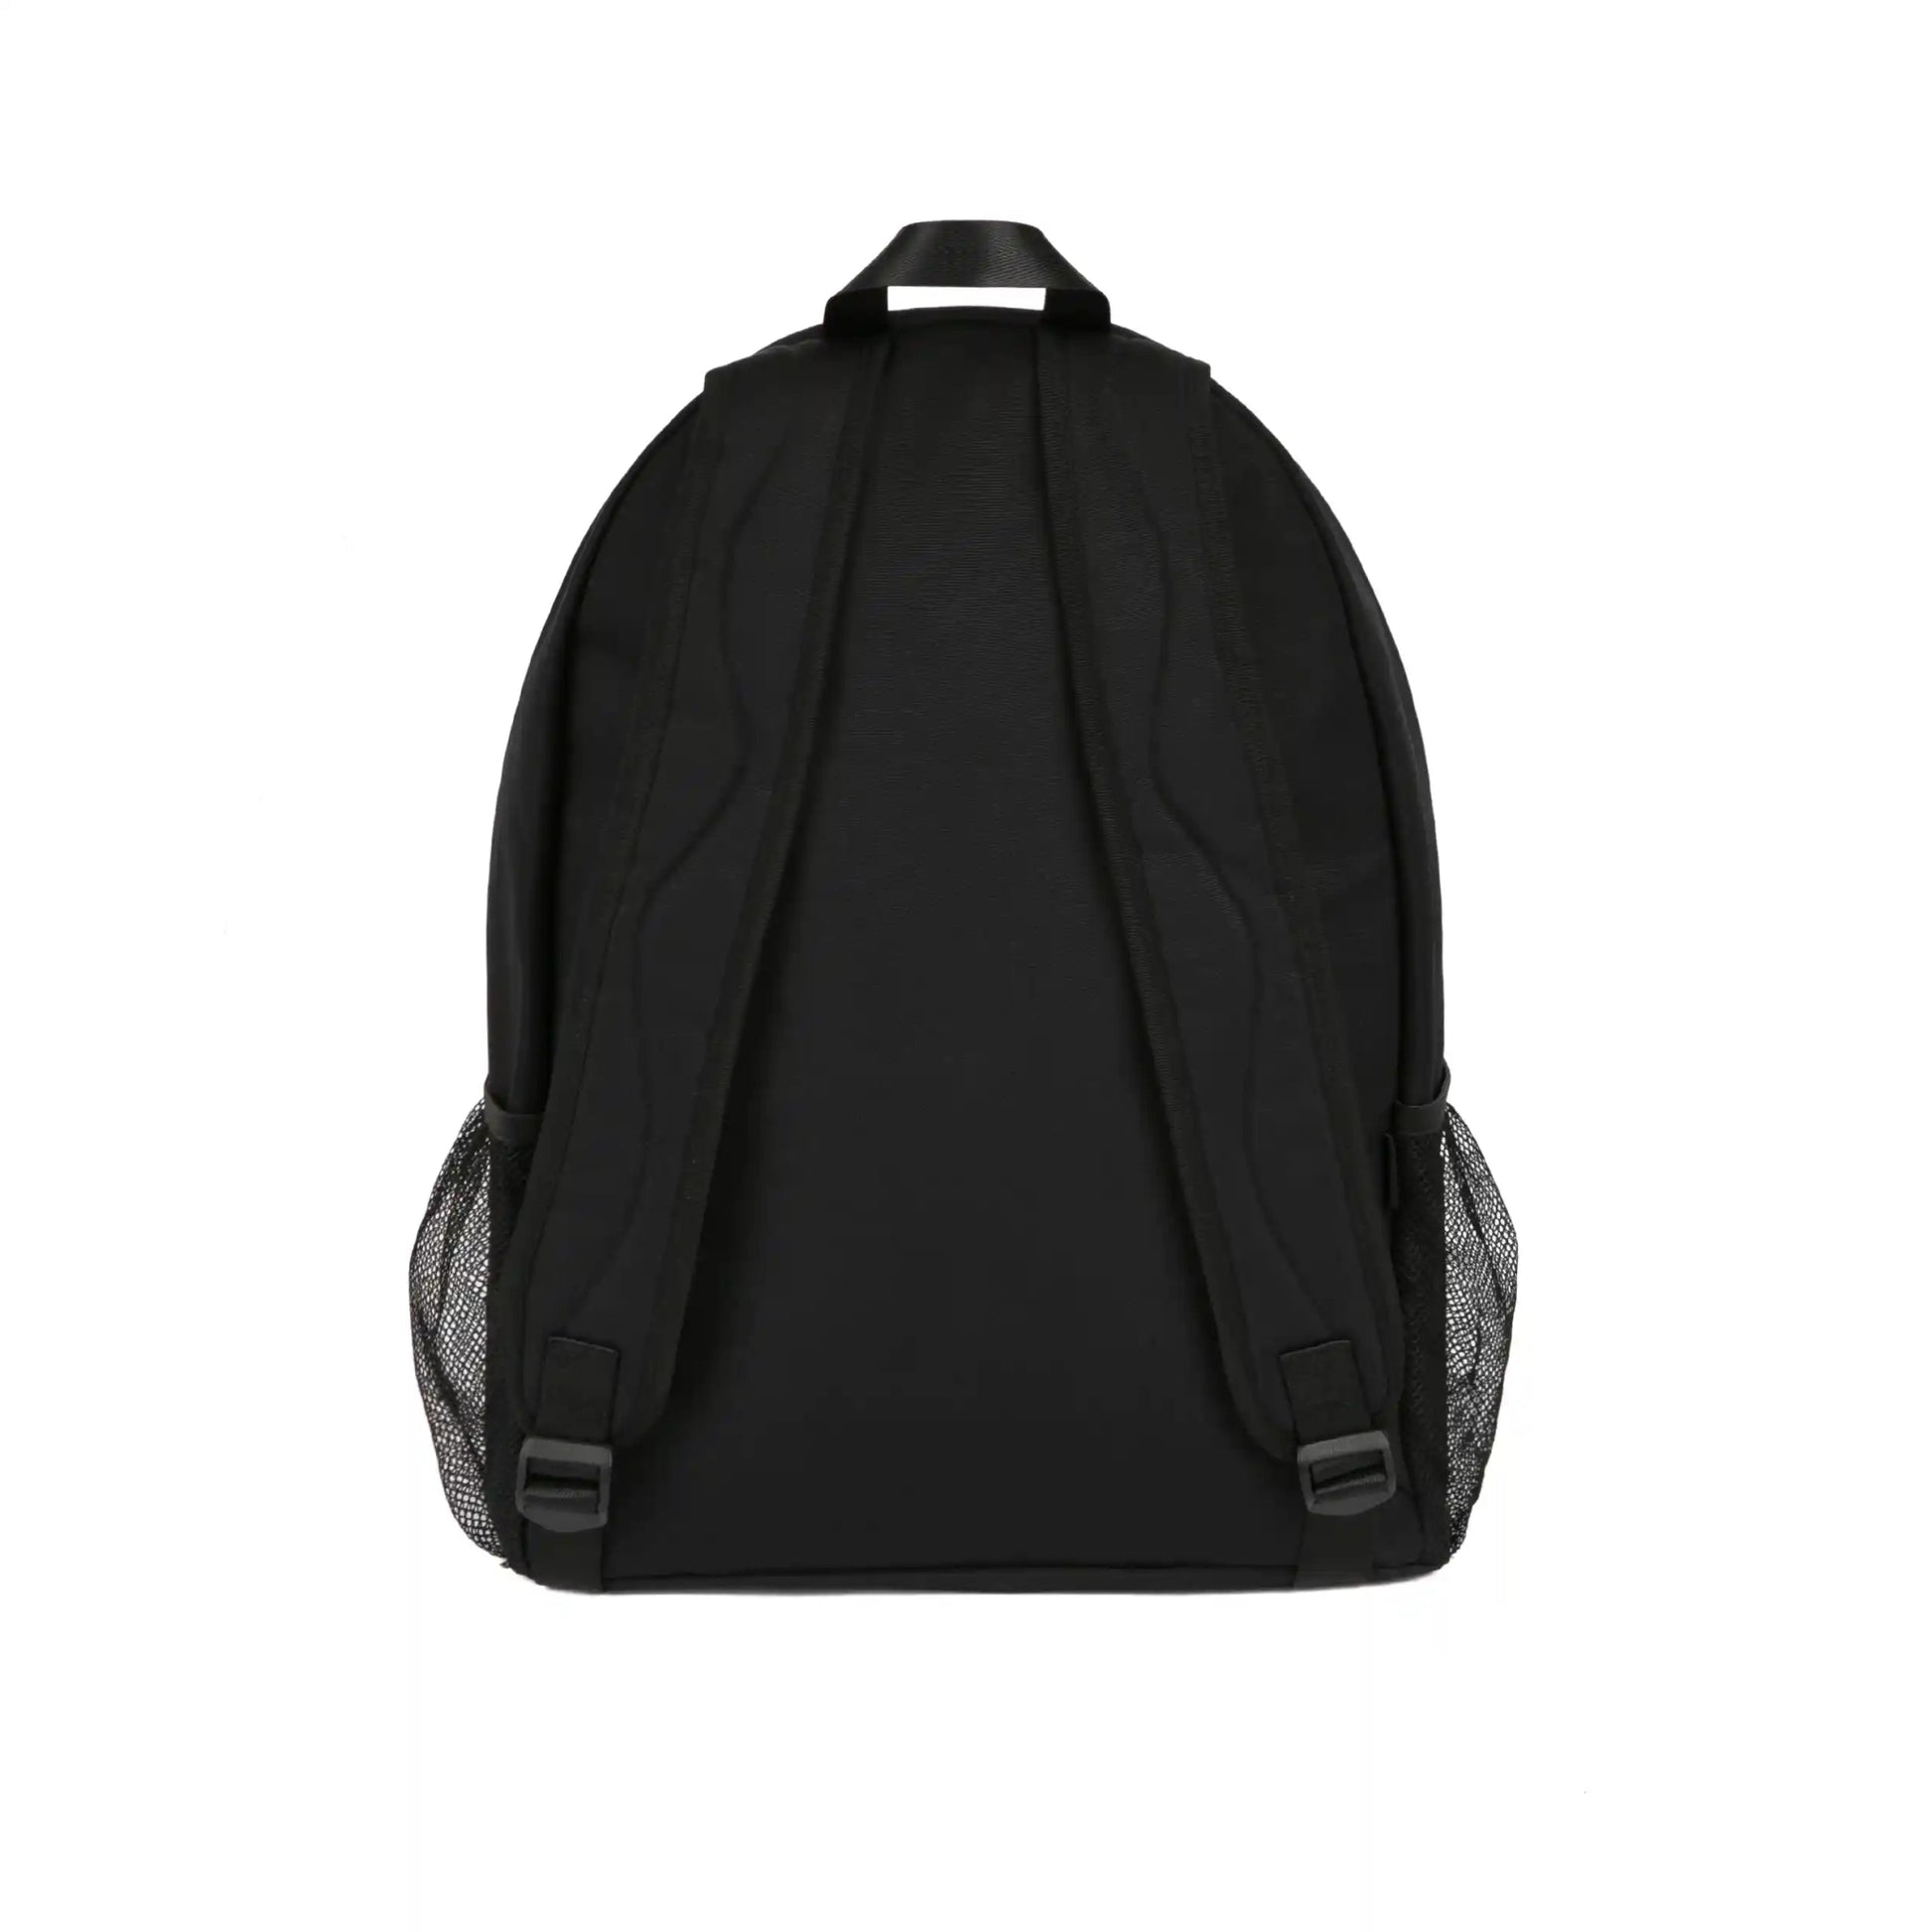 Dime Classic Studded Backpack, black - Tiki Room Skateboards - 2